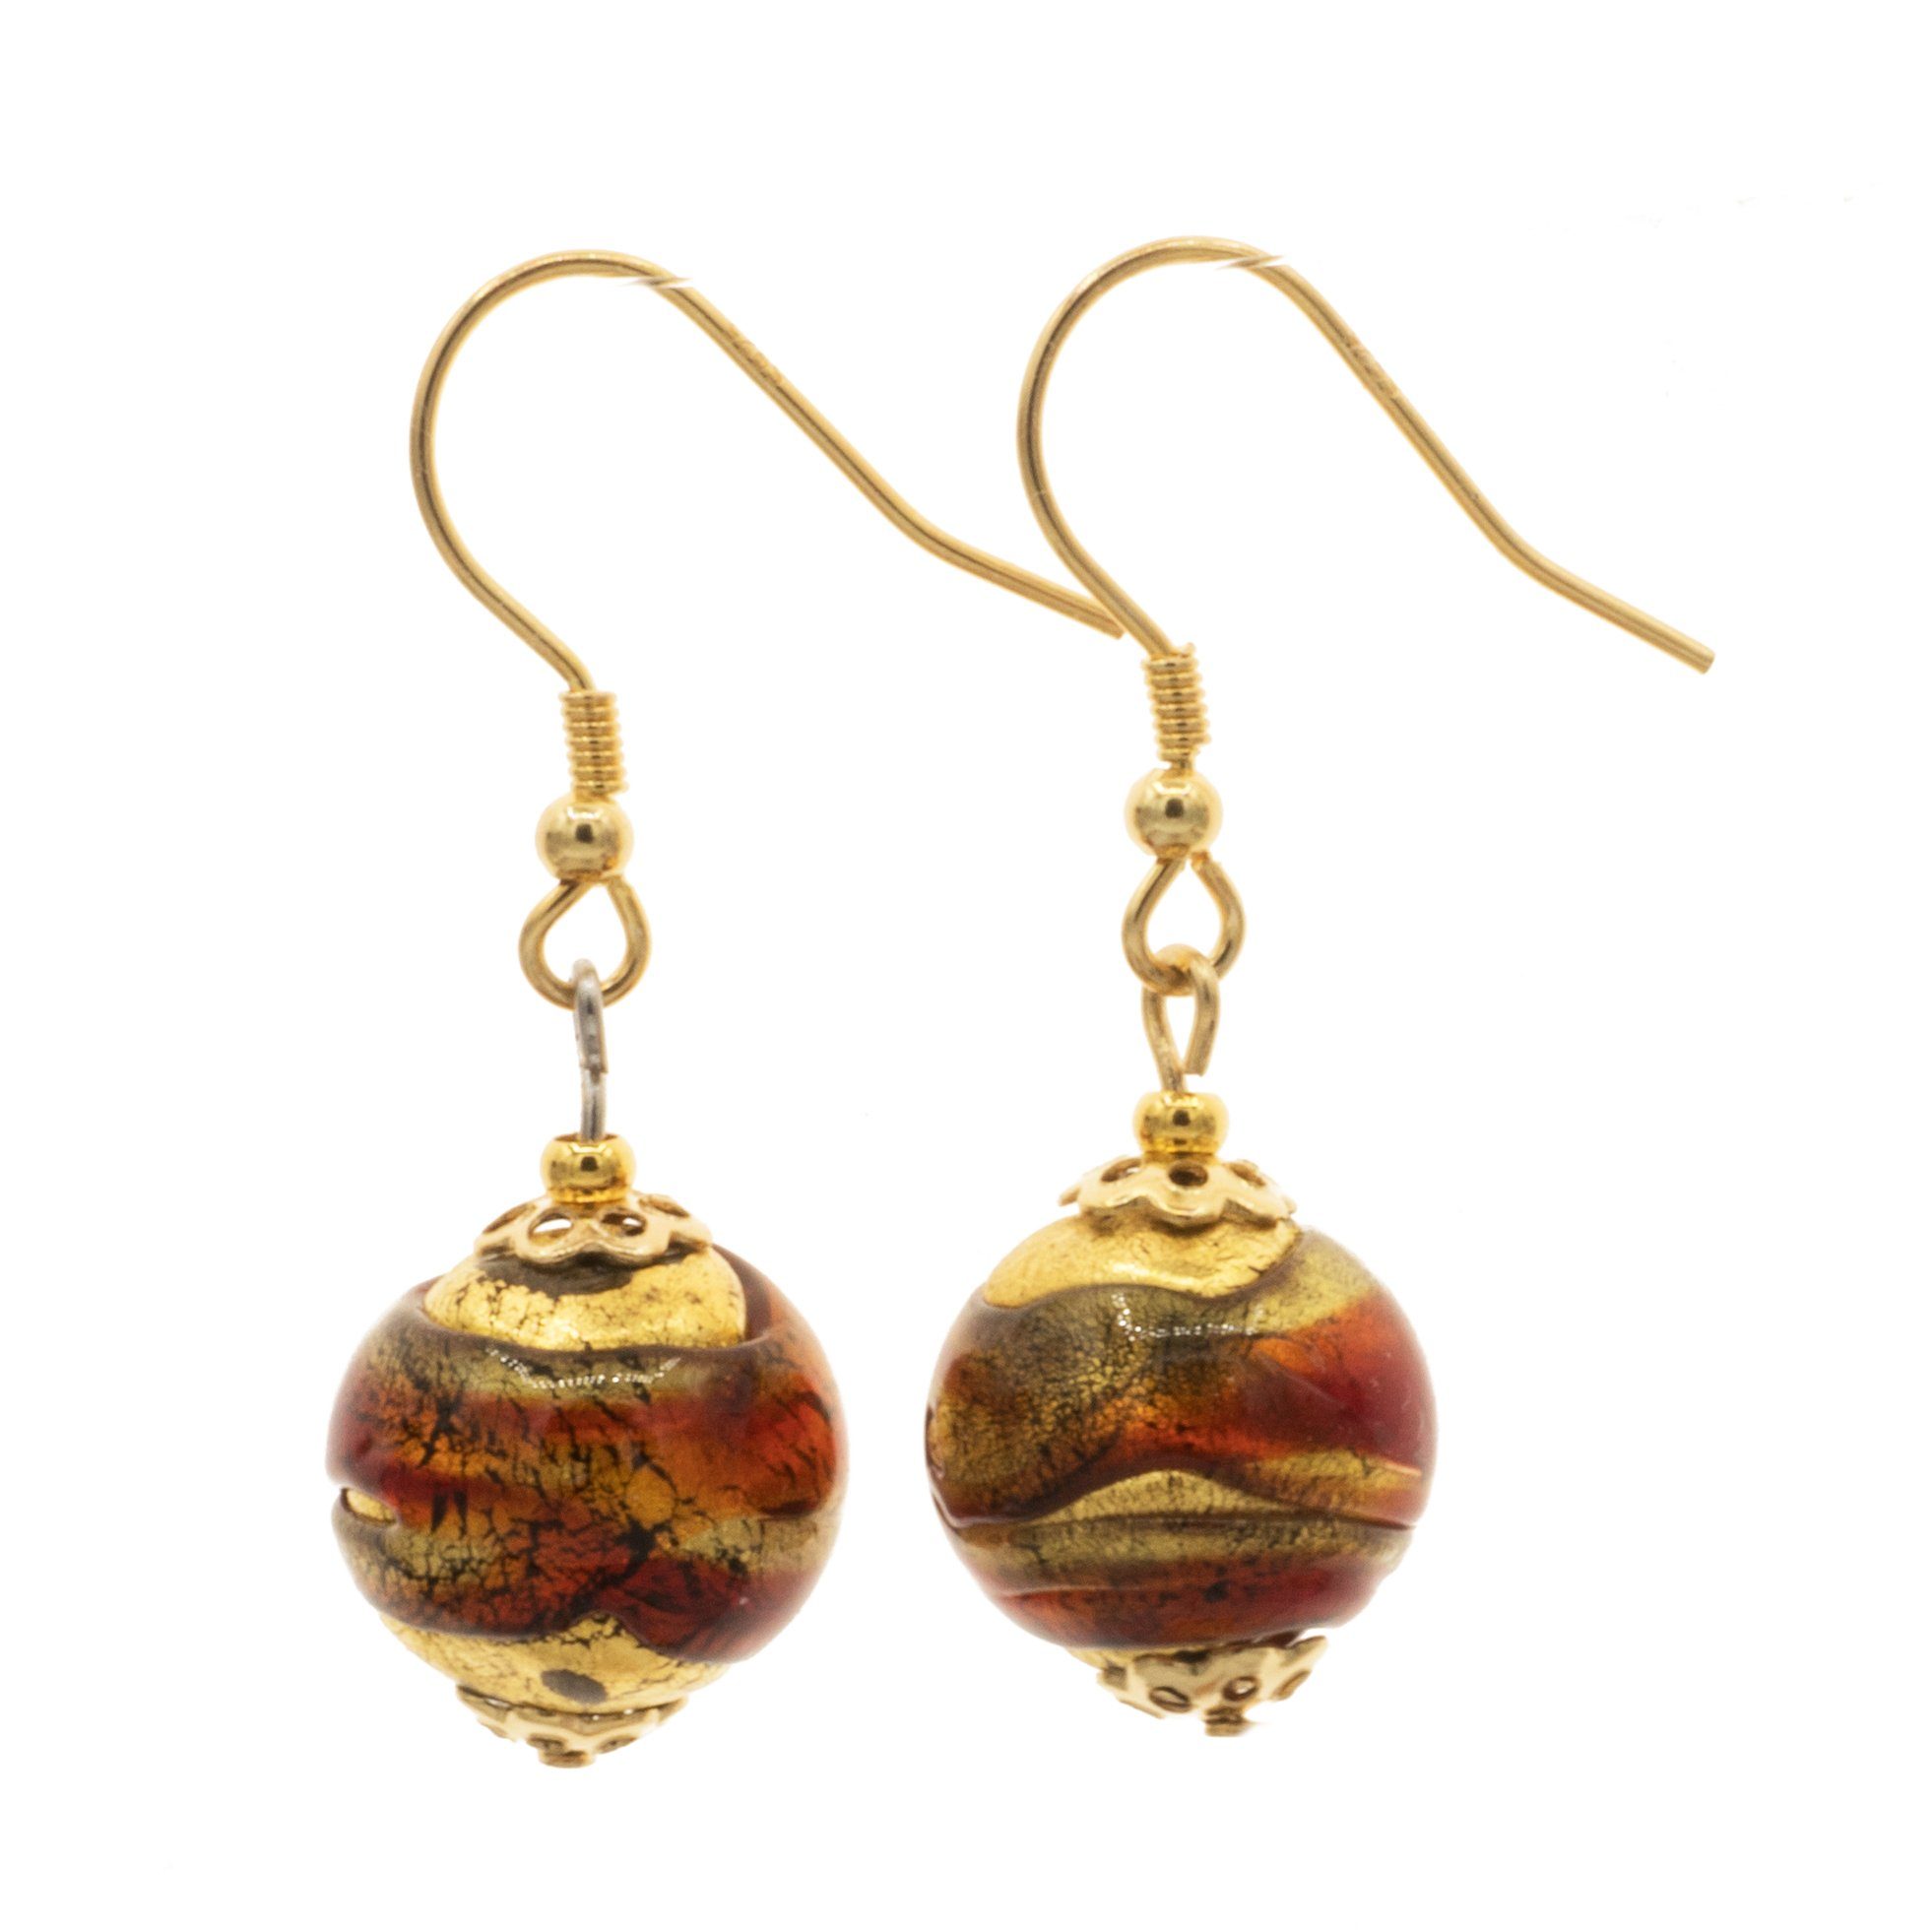 Damen Schmuck Bella Carina Paar Ohrhänger Ohrringe mit echtem Murano Glas rot gold, 925 Silber vergoldet, eches Murano Glas Perl